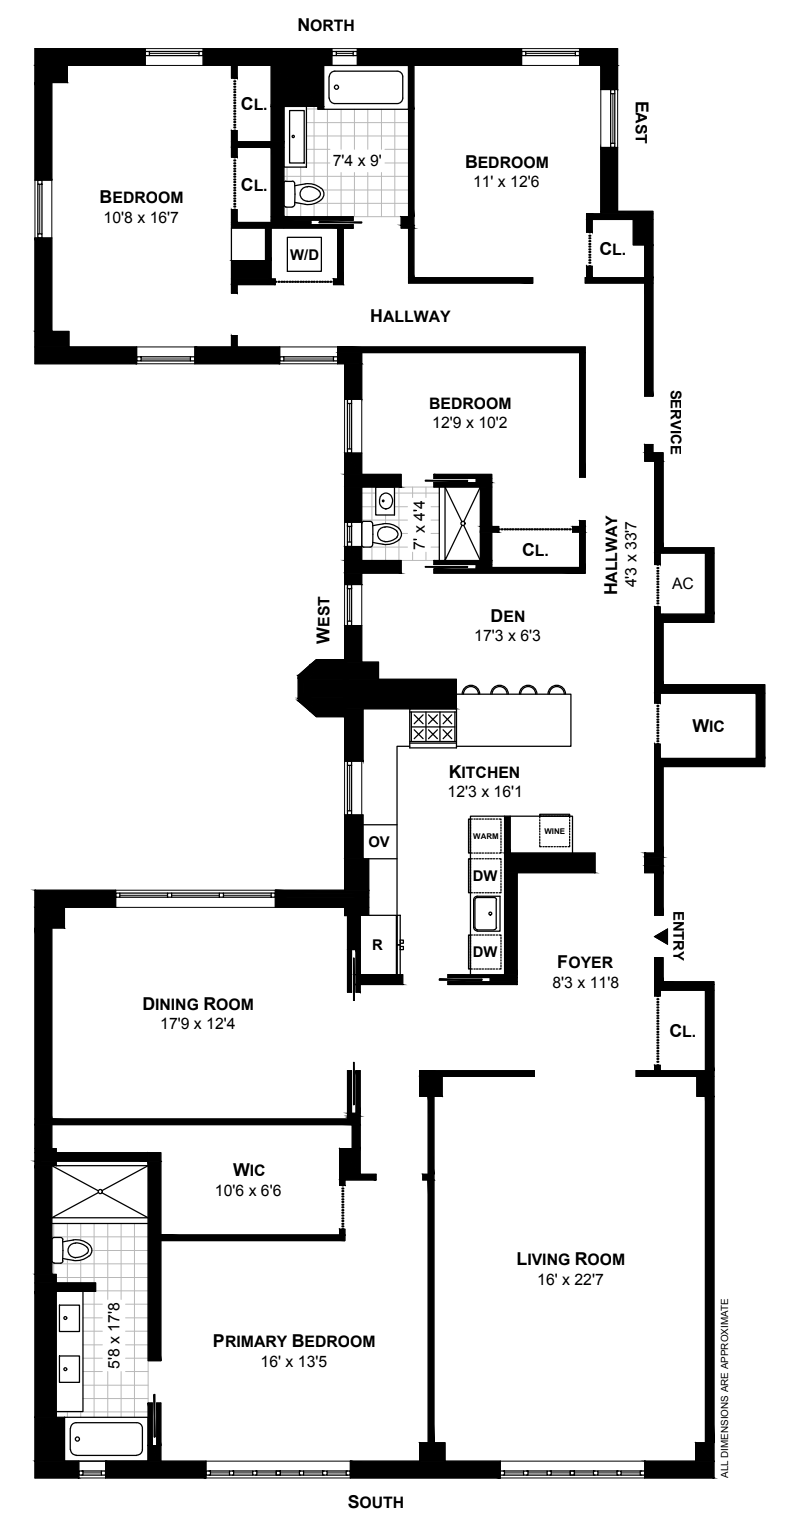 Floorplan for 317 West 89th Street